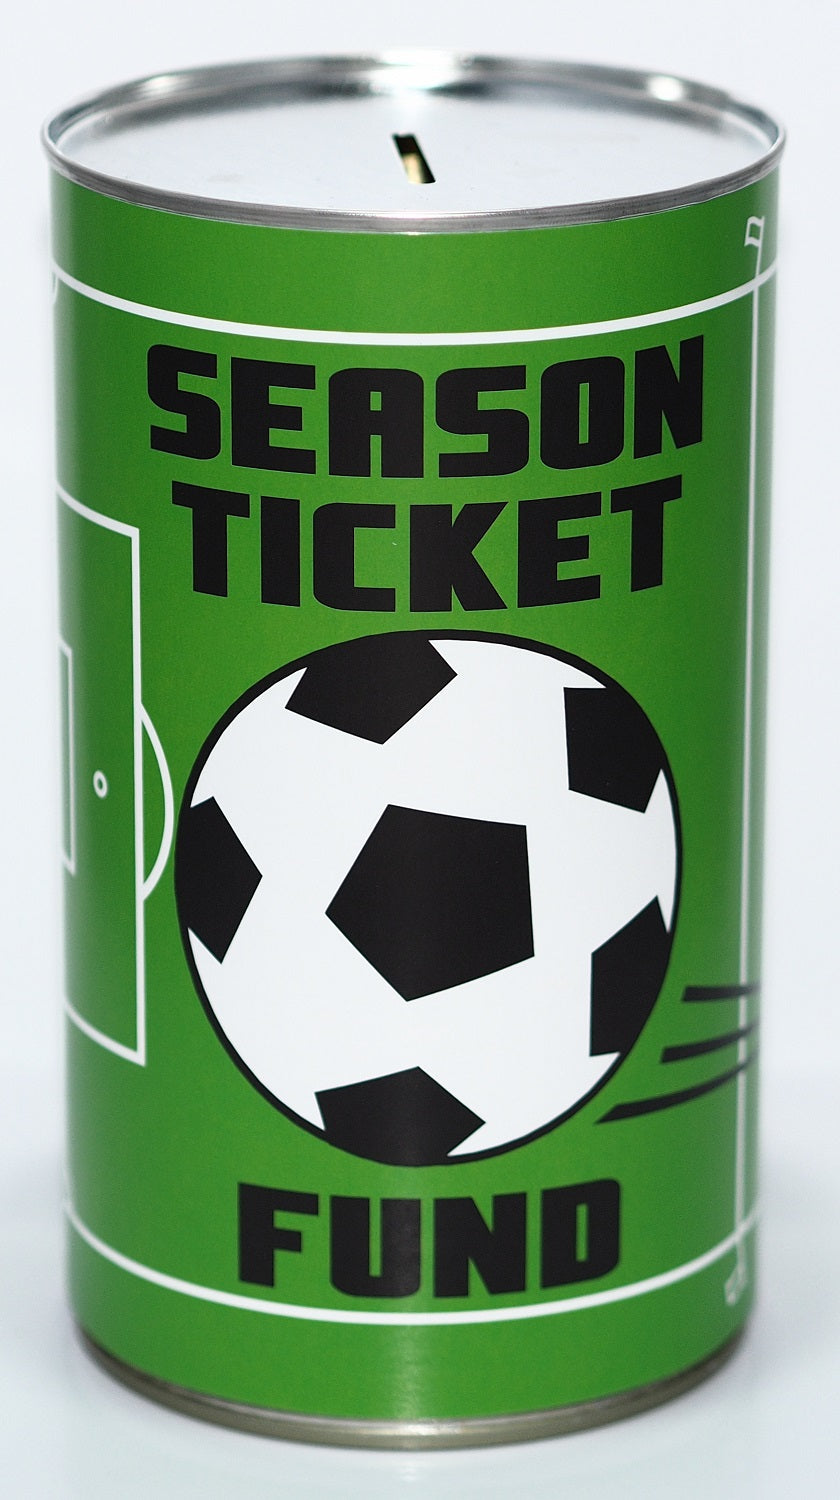 Football Season Ticket Savings Tin